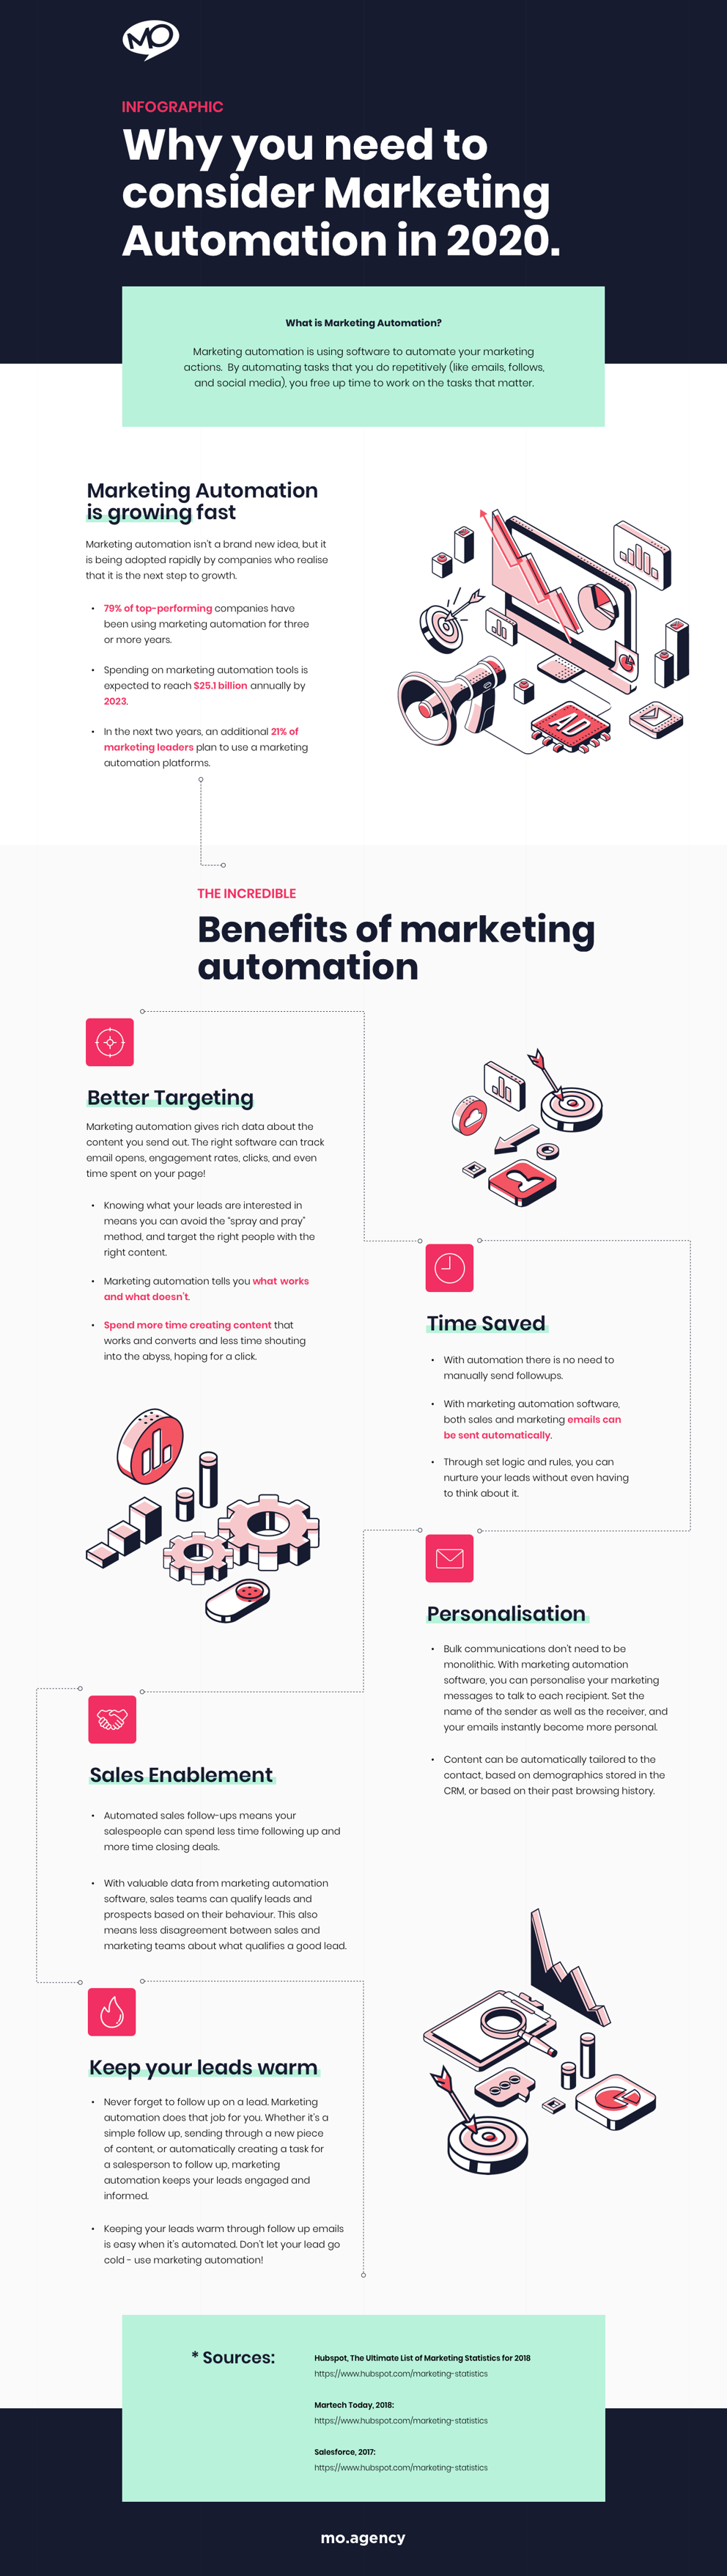 MO - Marketing Automation - Infographic